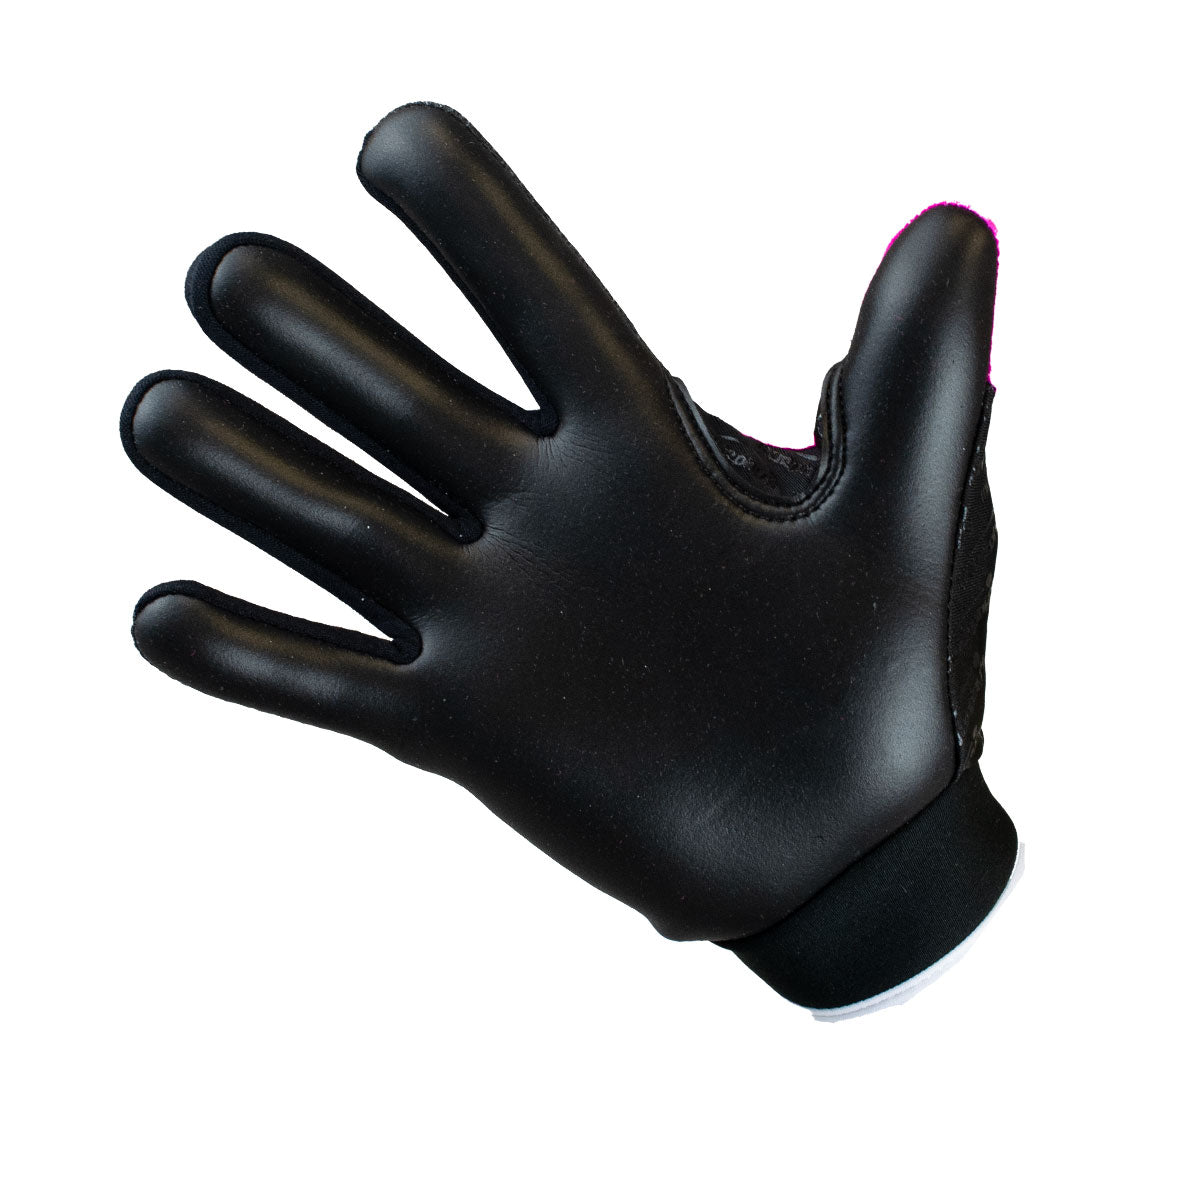 Murphy's V2 Gaelic Gloves - Adult - Pink/Black/White